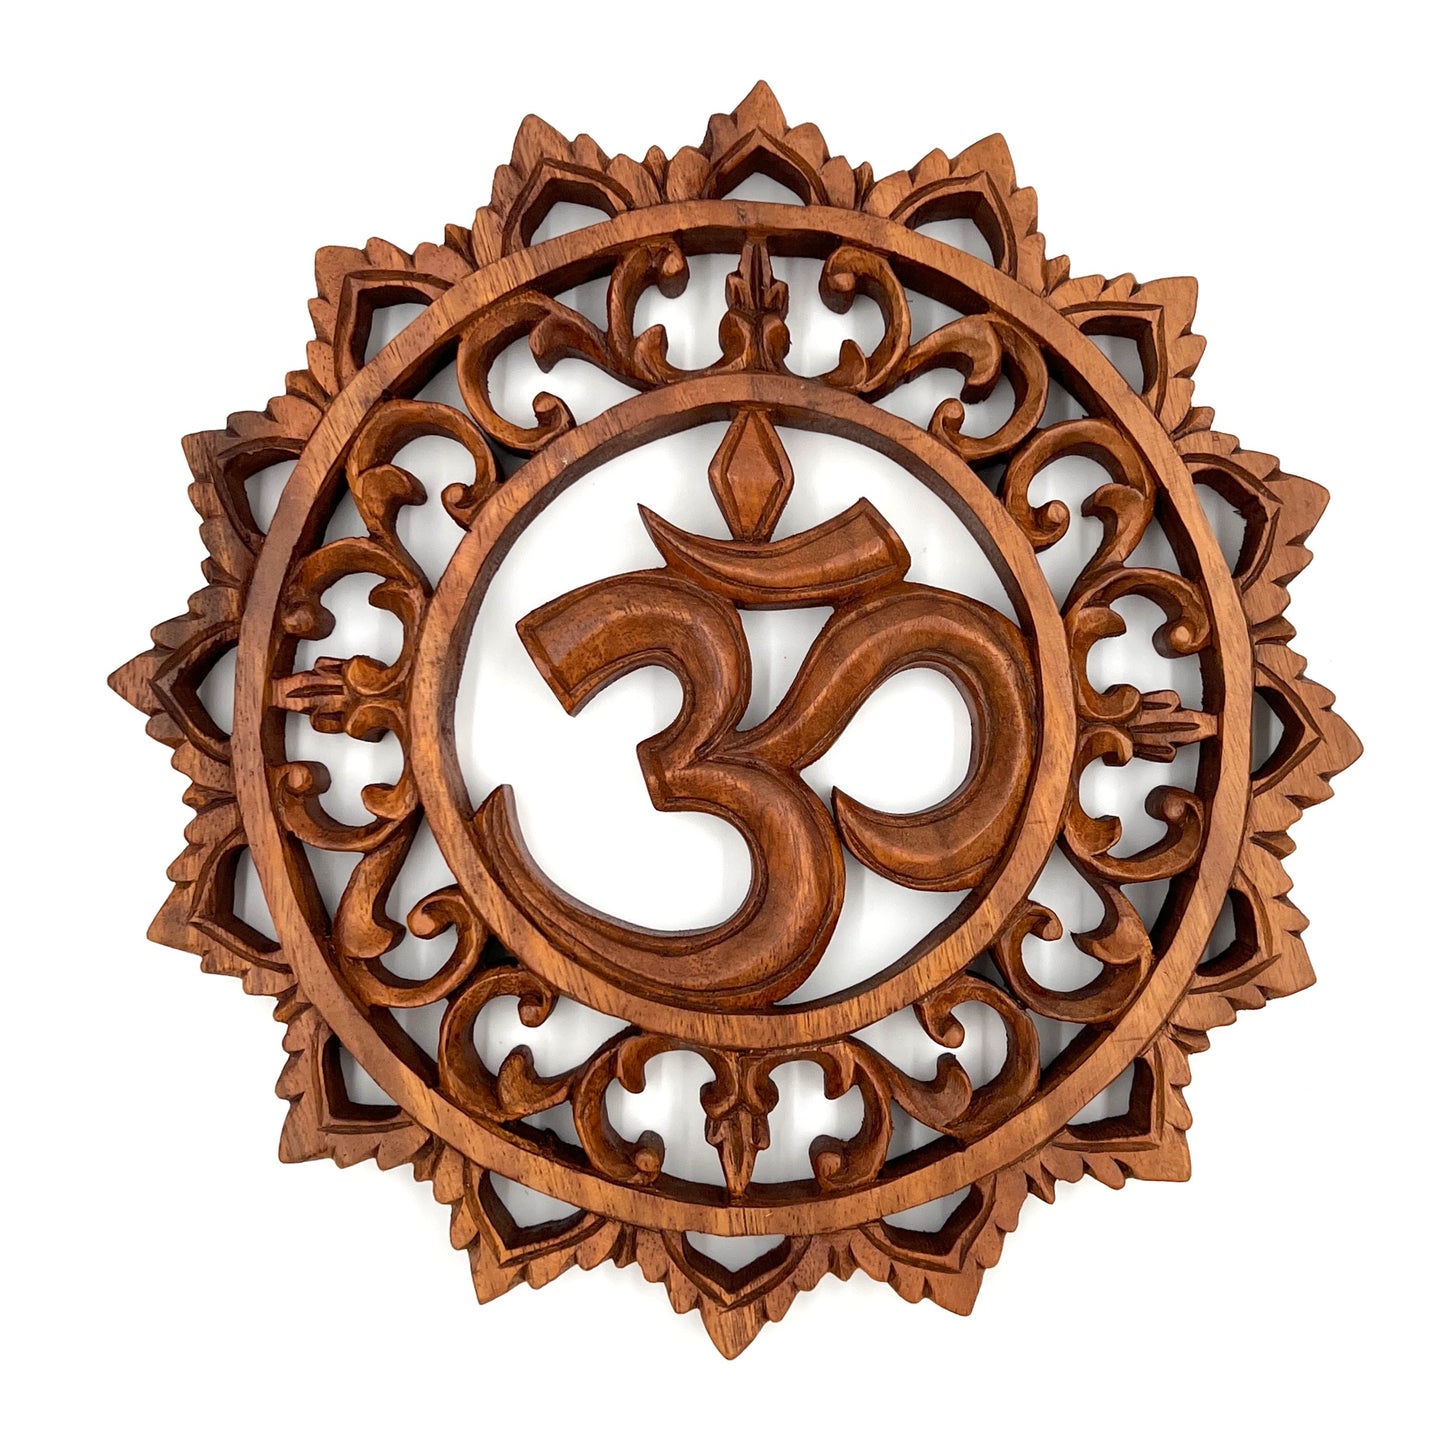 Om Mandala Panel Carving